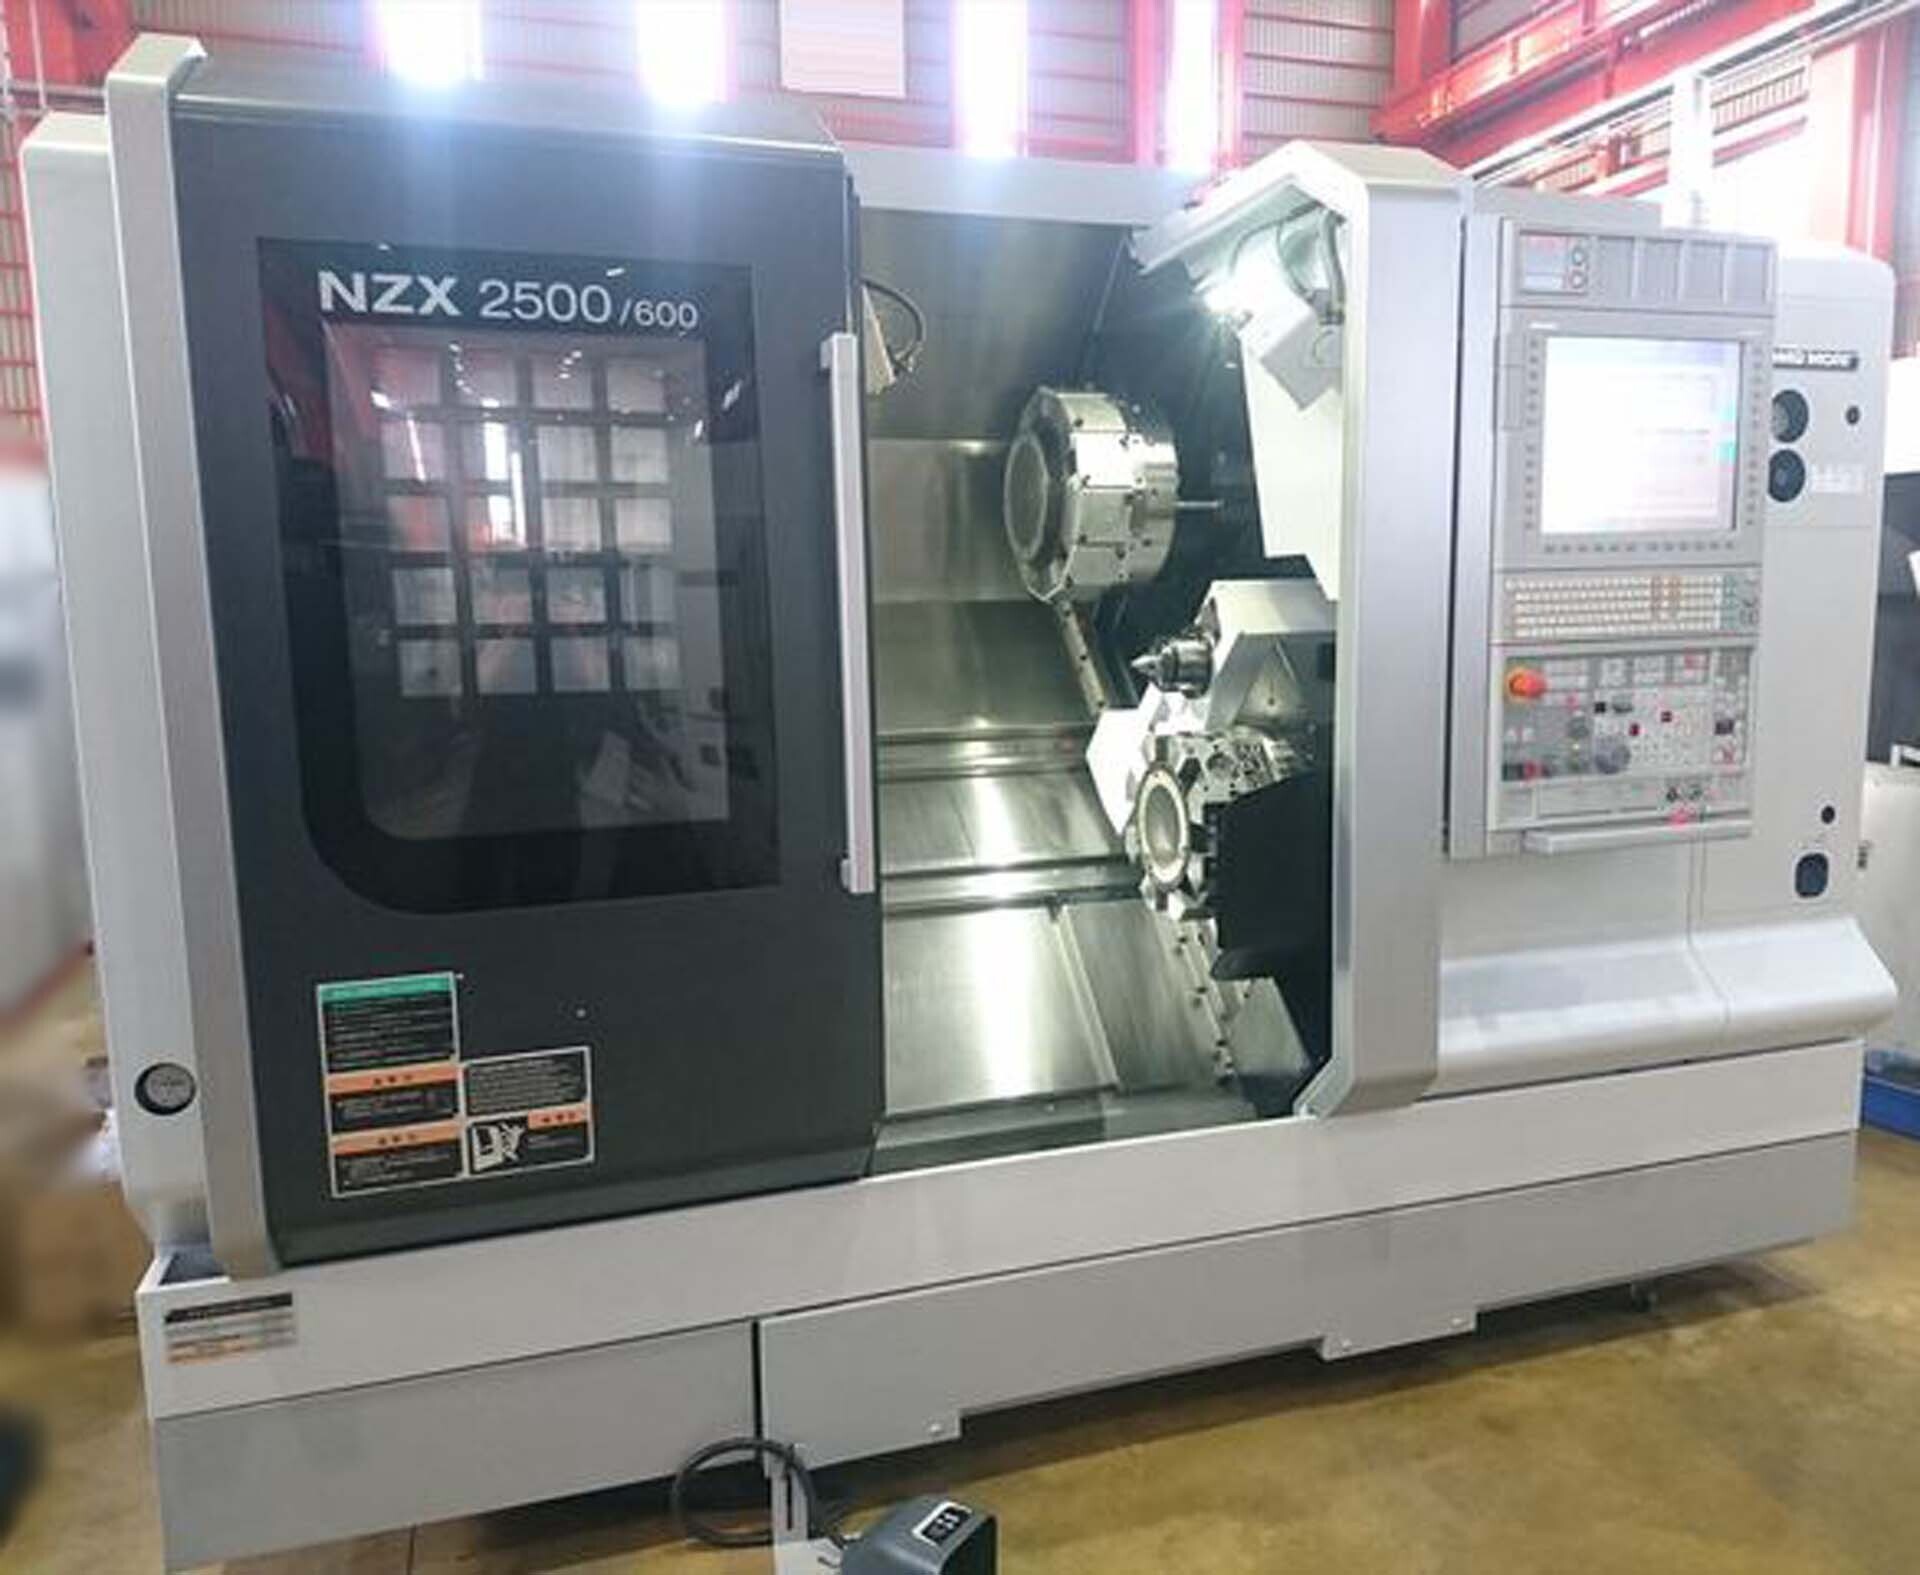 MORI SEIKI / DMG NZX 2500/600L Machine Tool used for sale price ...